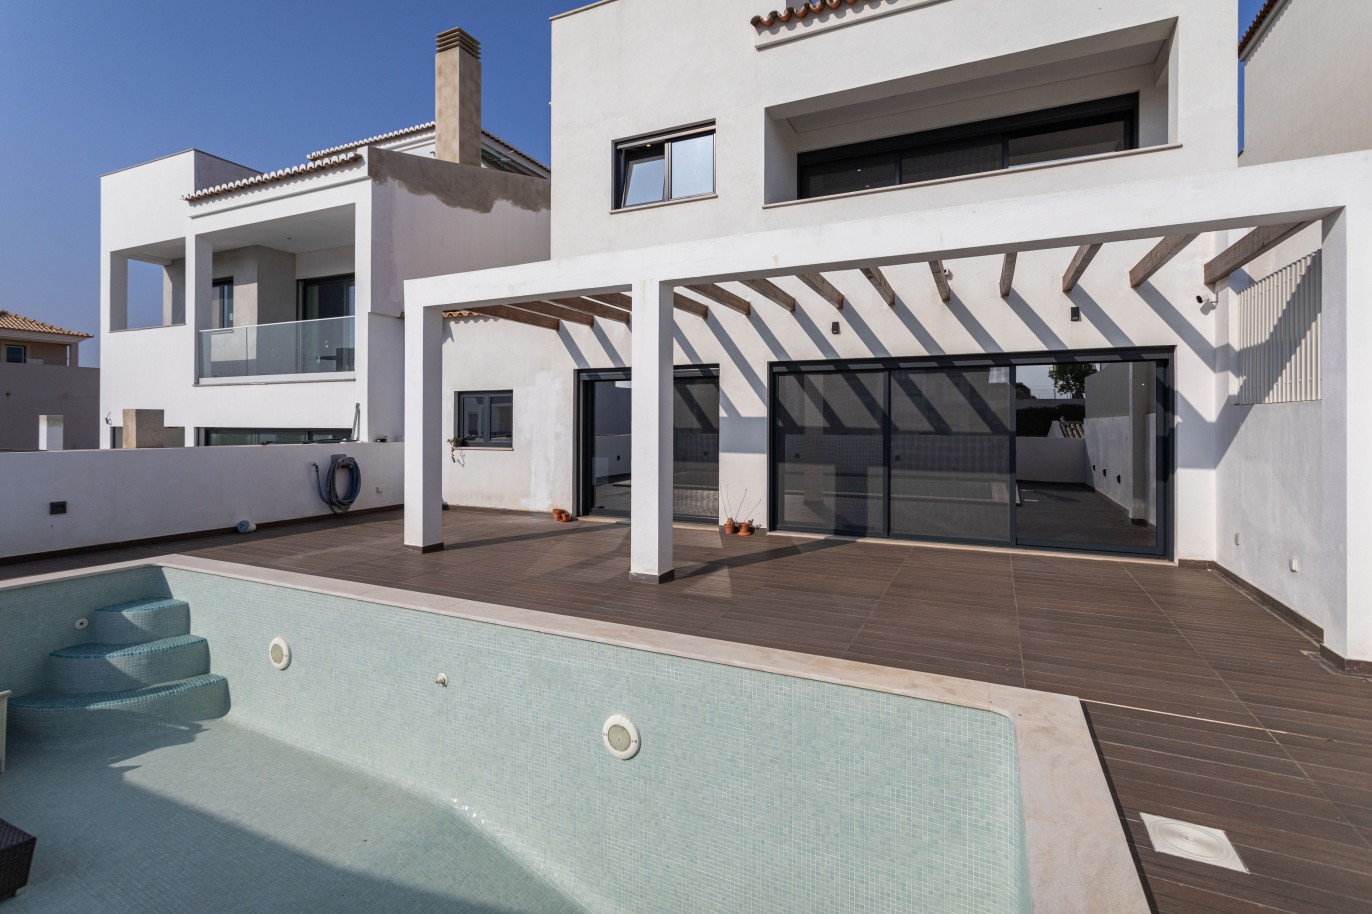 4 Bedroom Villa with pool, for sale in Gambelas, Algarve_231142